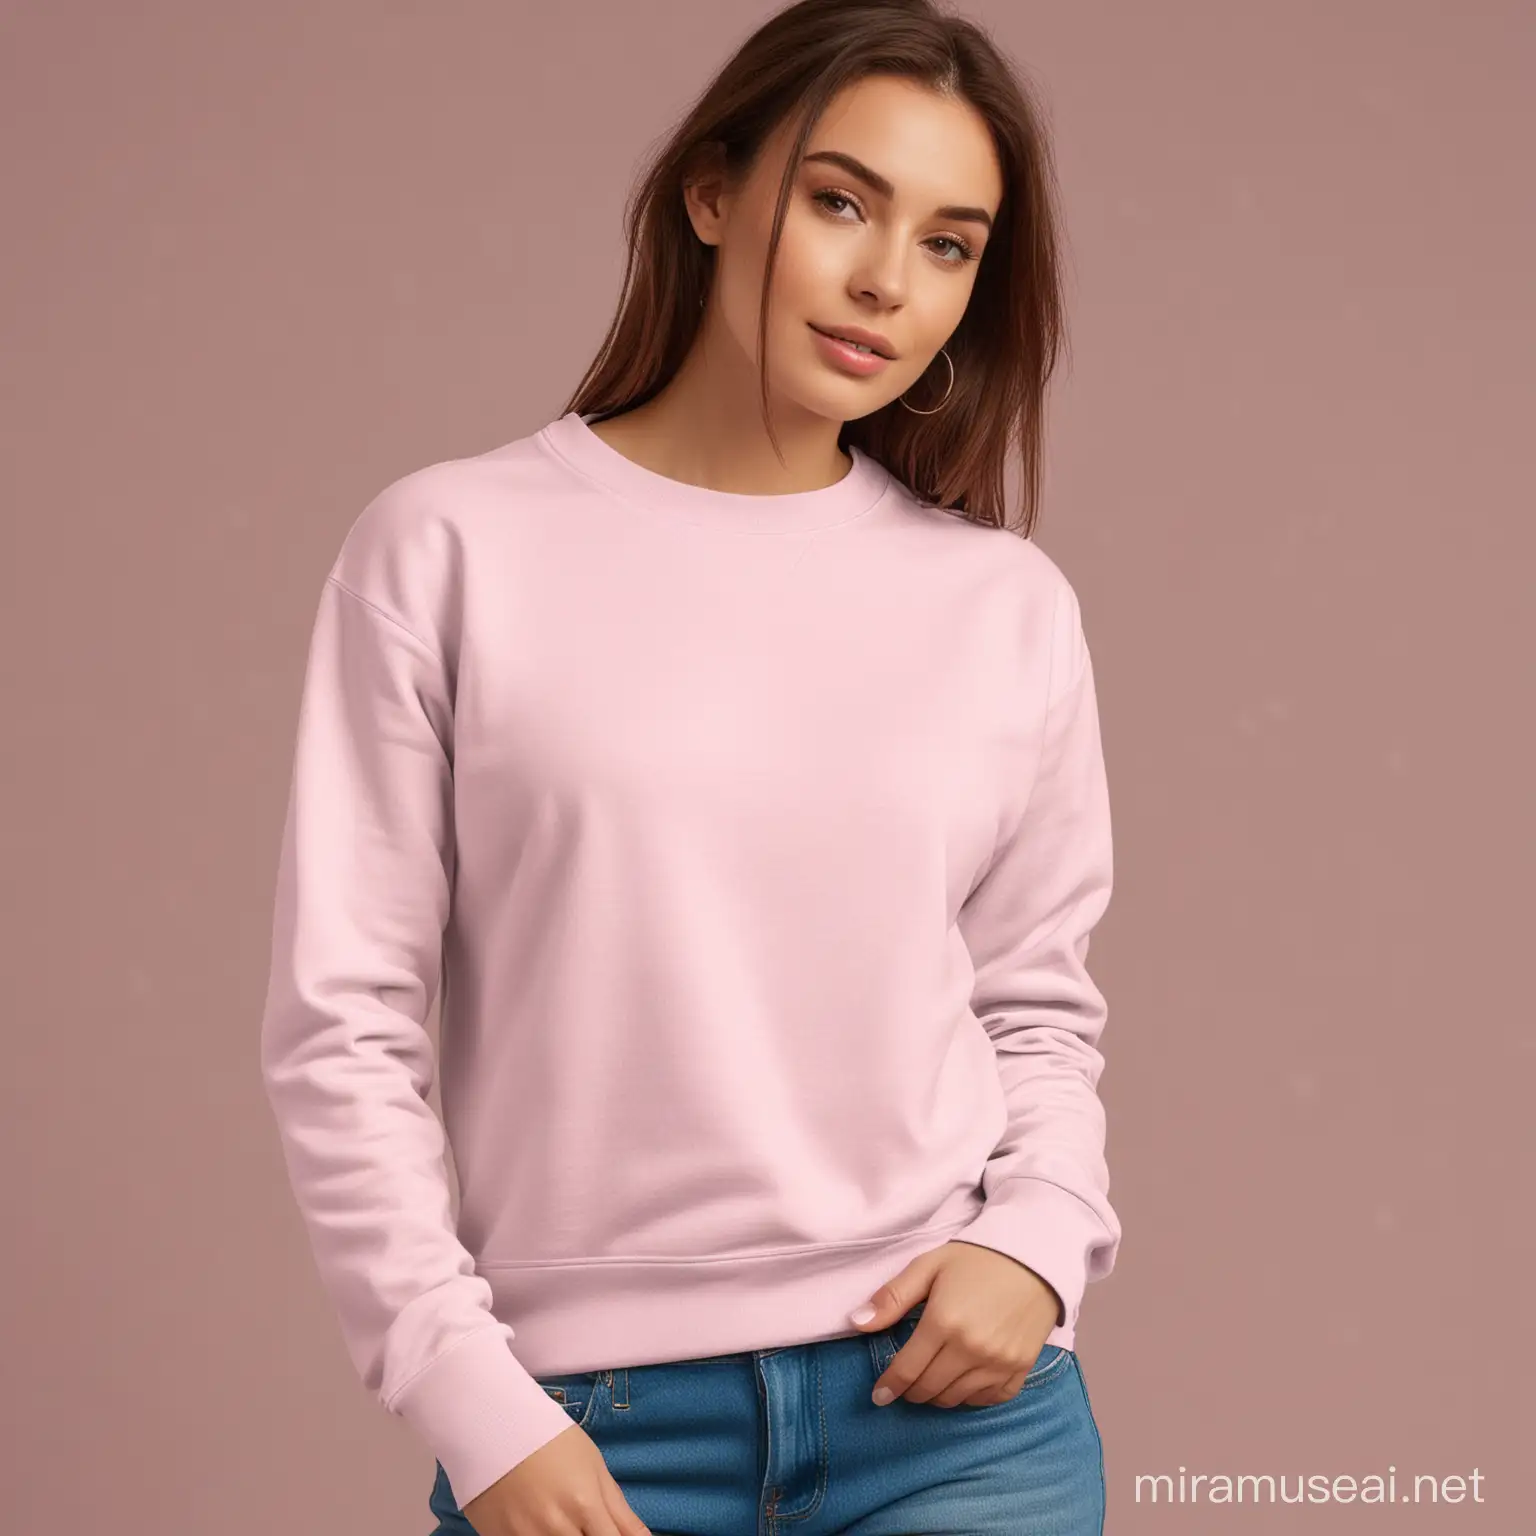 Light Pink Gildan 18000 Mockup Blank Female Sweatshirt Portrait